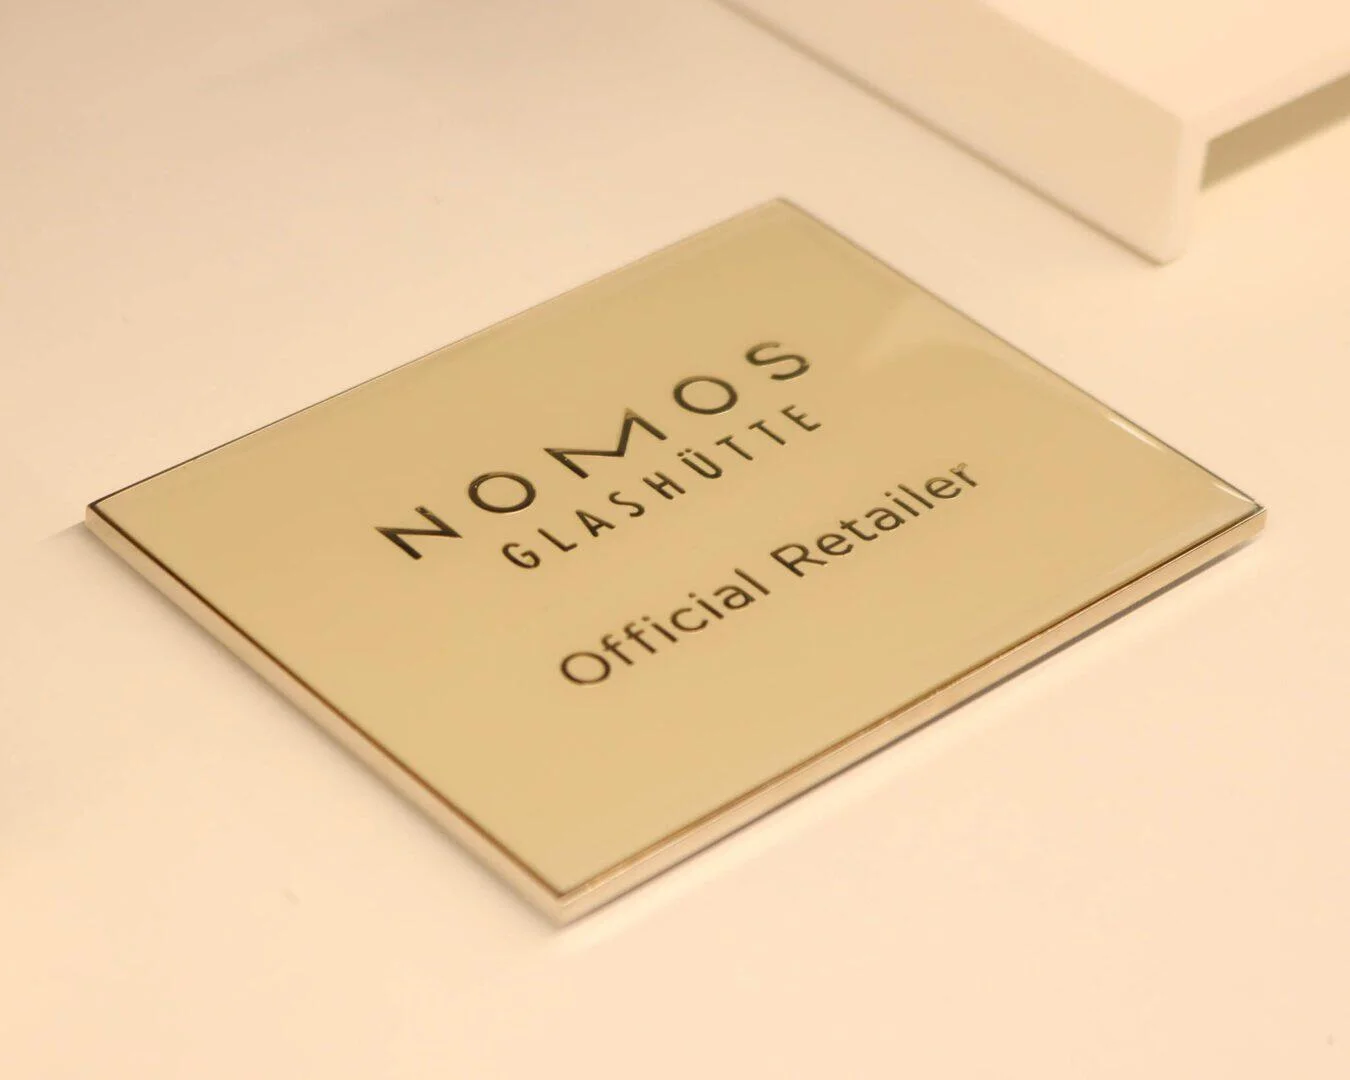 Hovisepät on NOMOS Glashütte Official Retailer.